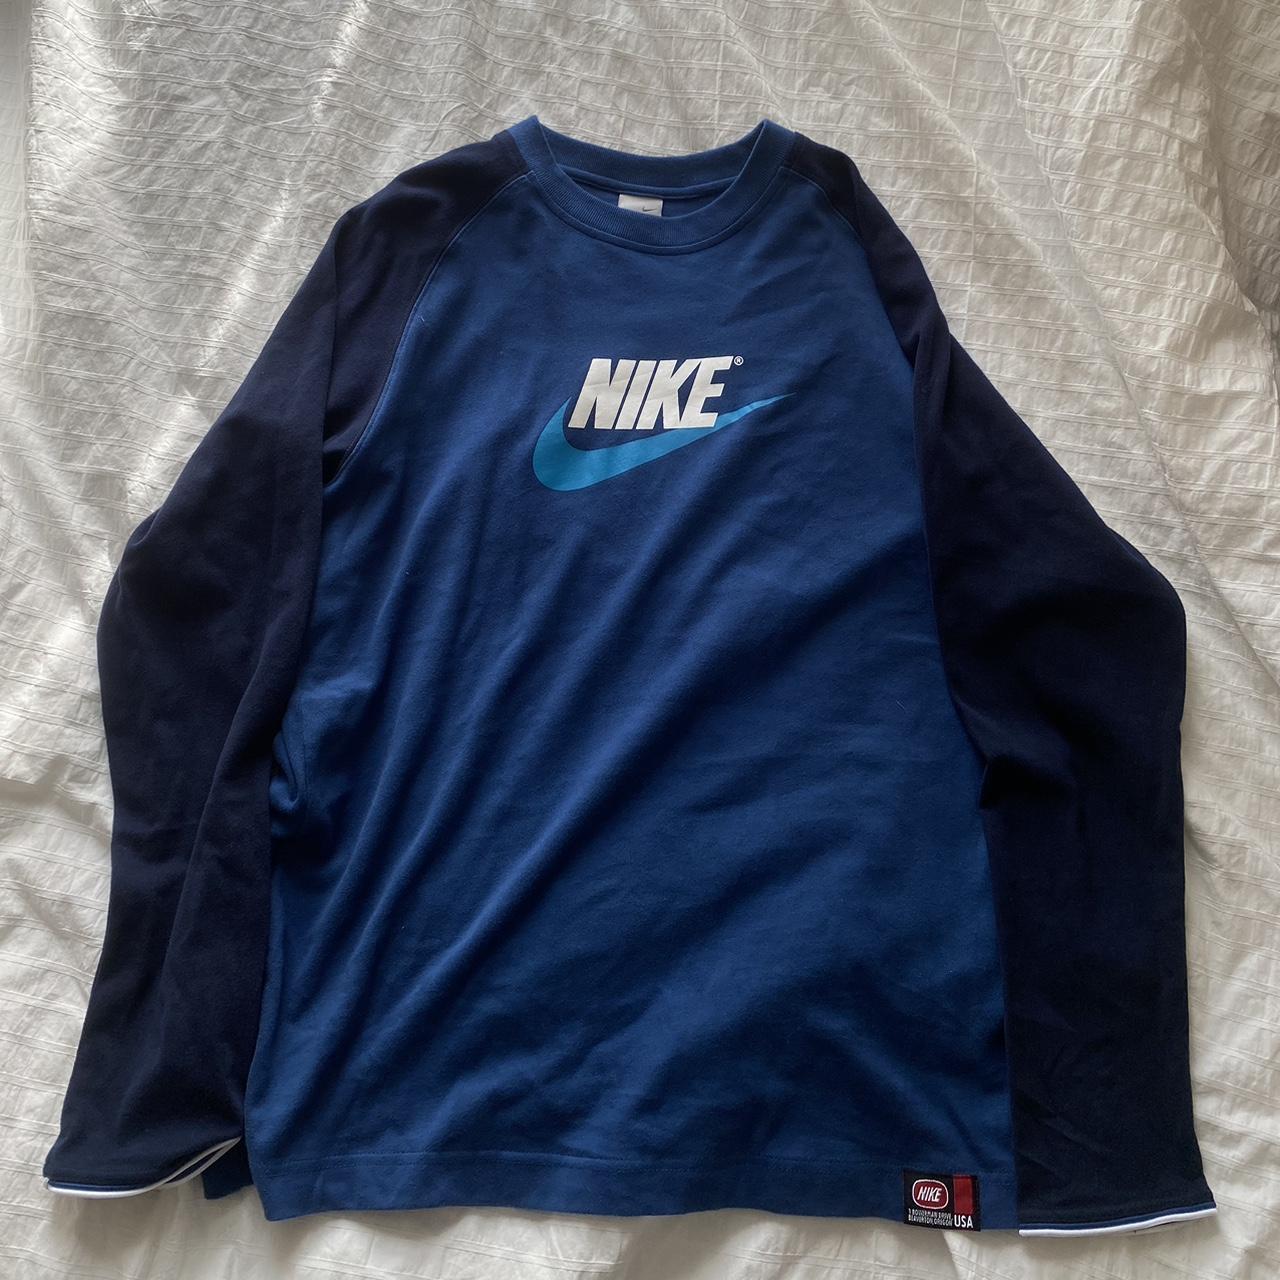 Nike baseball tshirt long sleeve Never worn - Depop